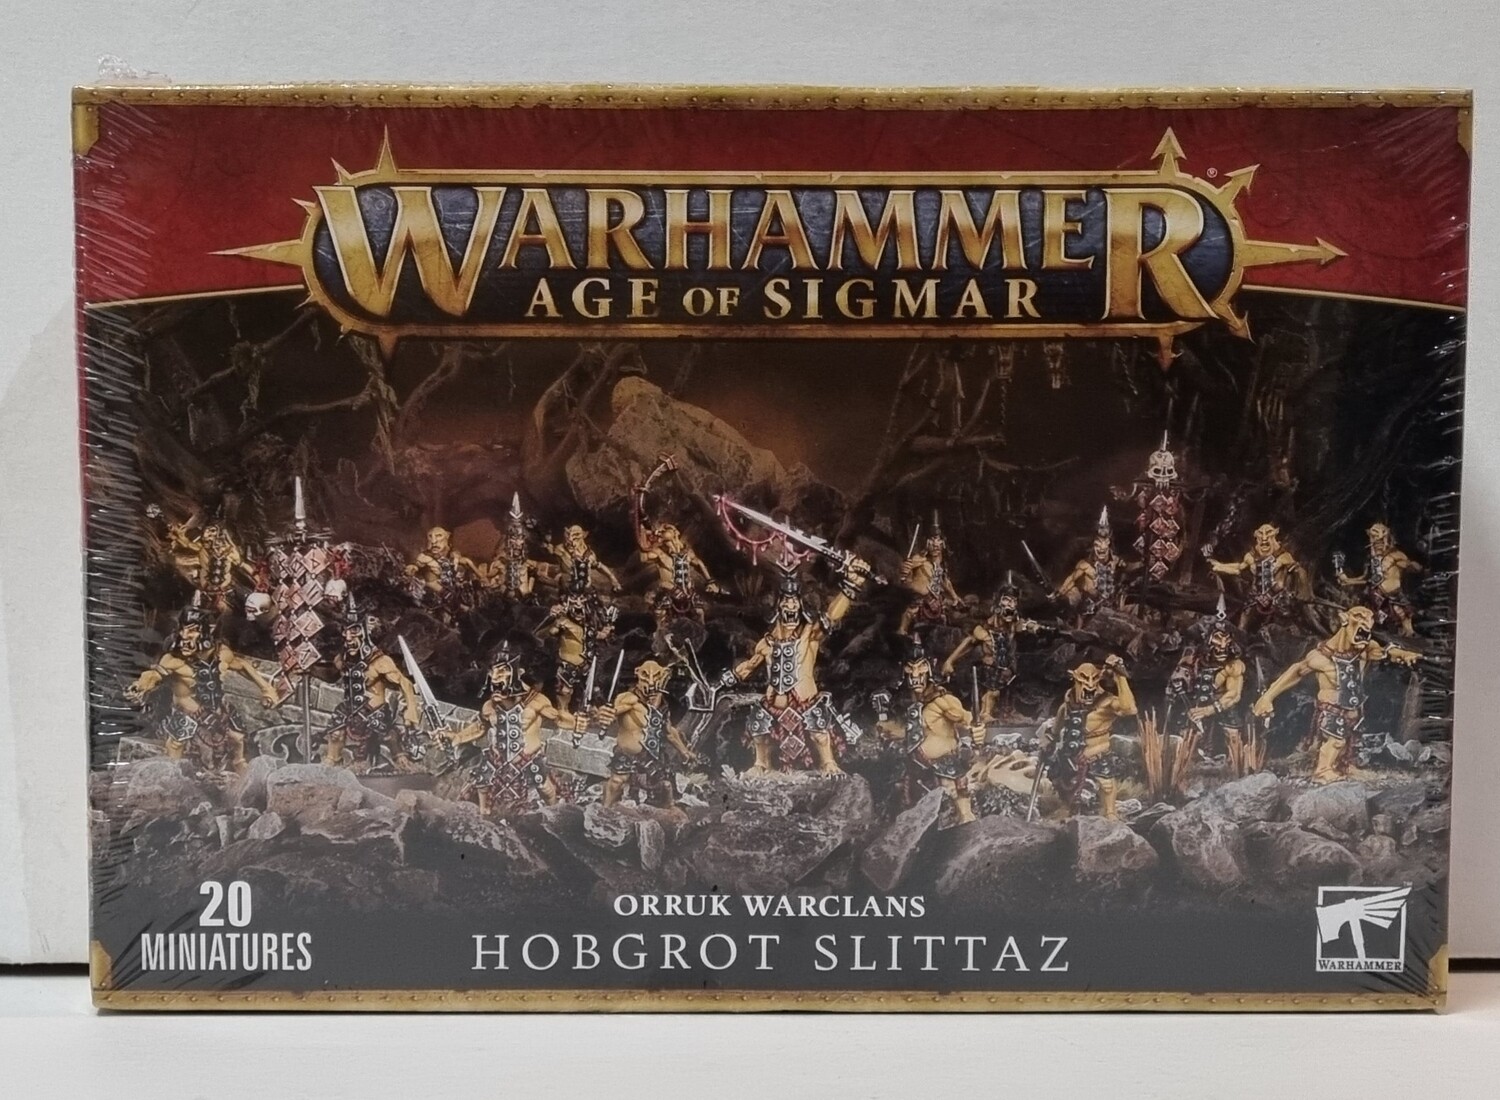 Warhammer, Age of Sigmar, 89-74, Orruk Warclans: Hobgrot Slittaz